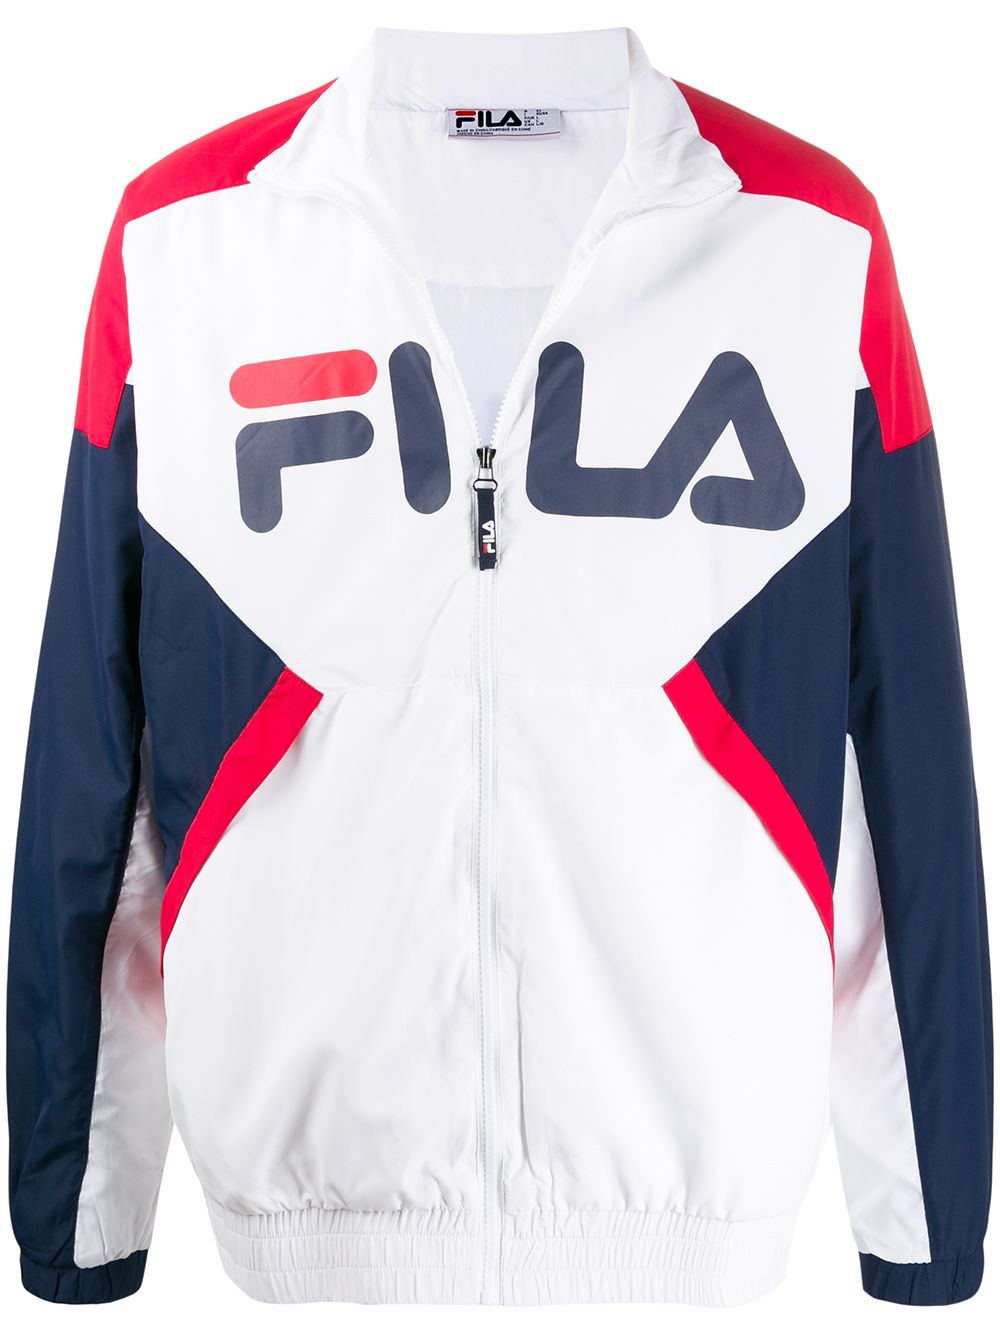 фото Fila спортивная куртка с логотипом